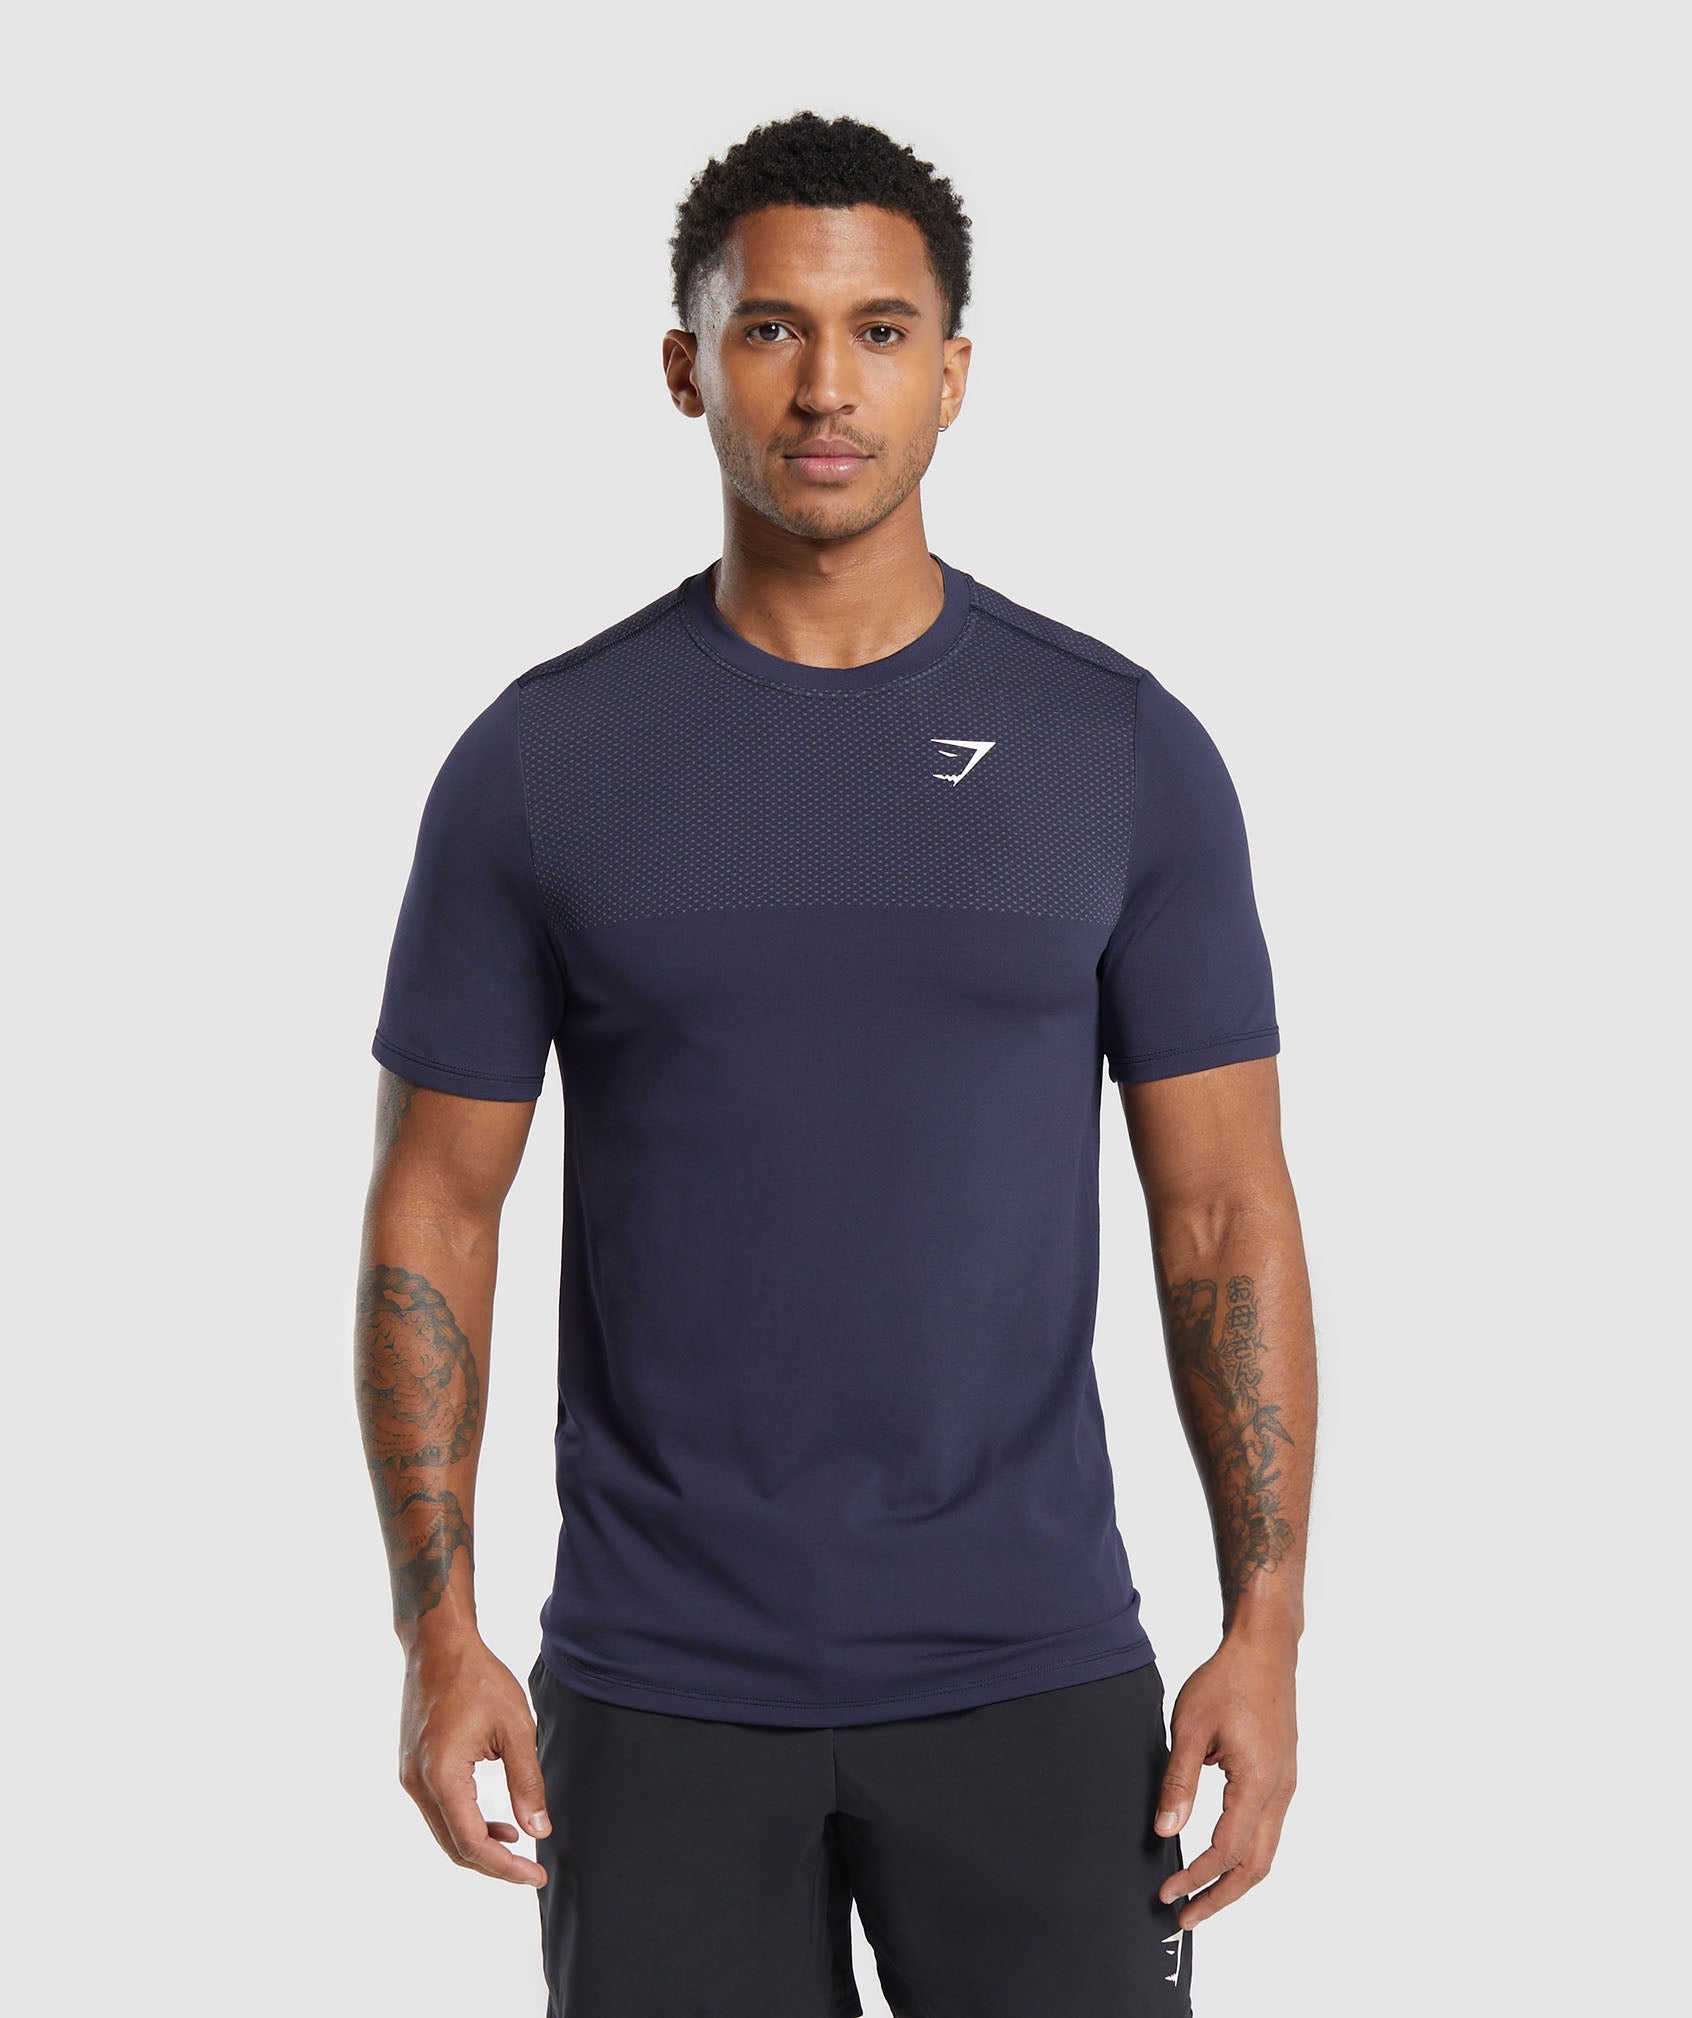 Gymshark Apex Seamless T-Shirt - Black/Silhouette Grey